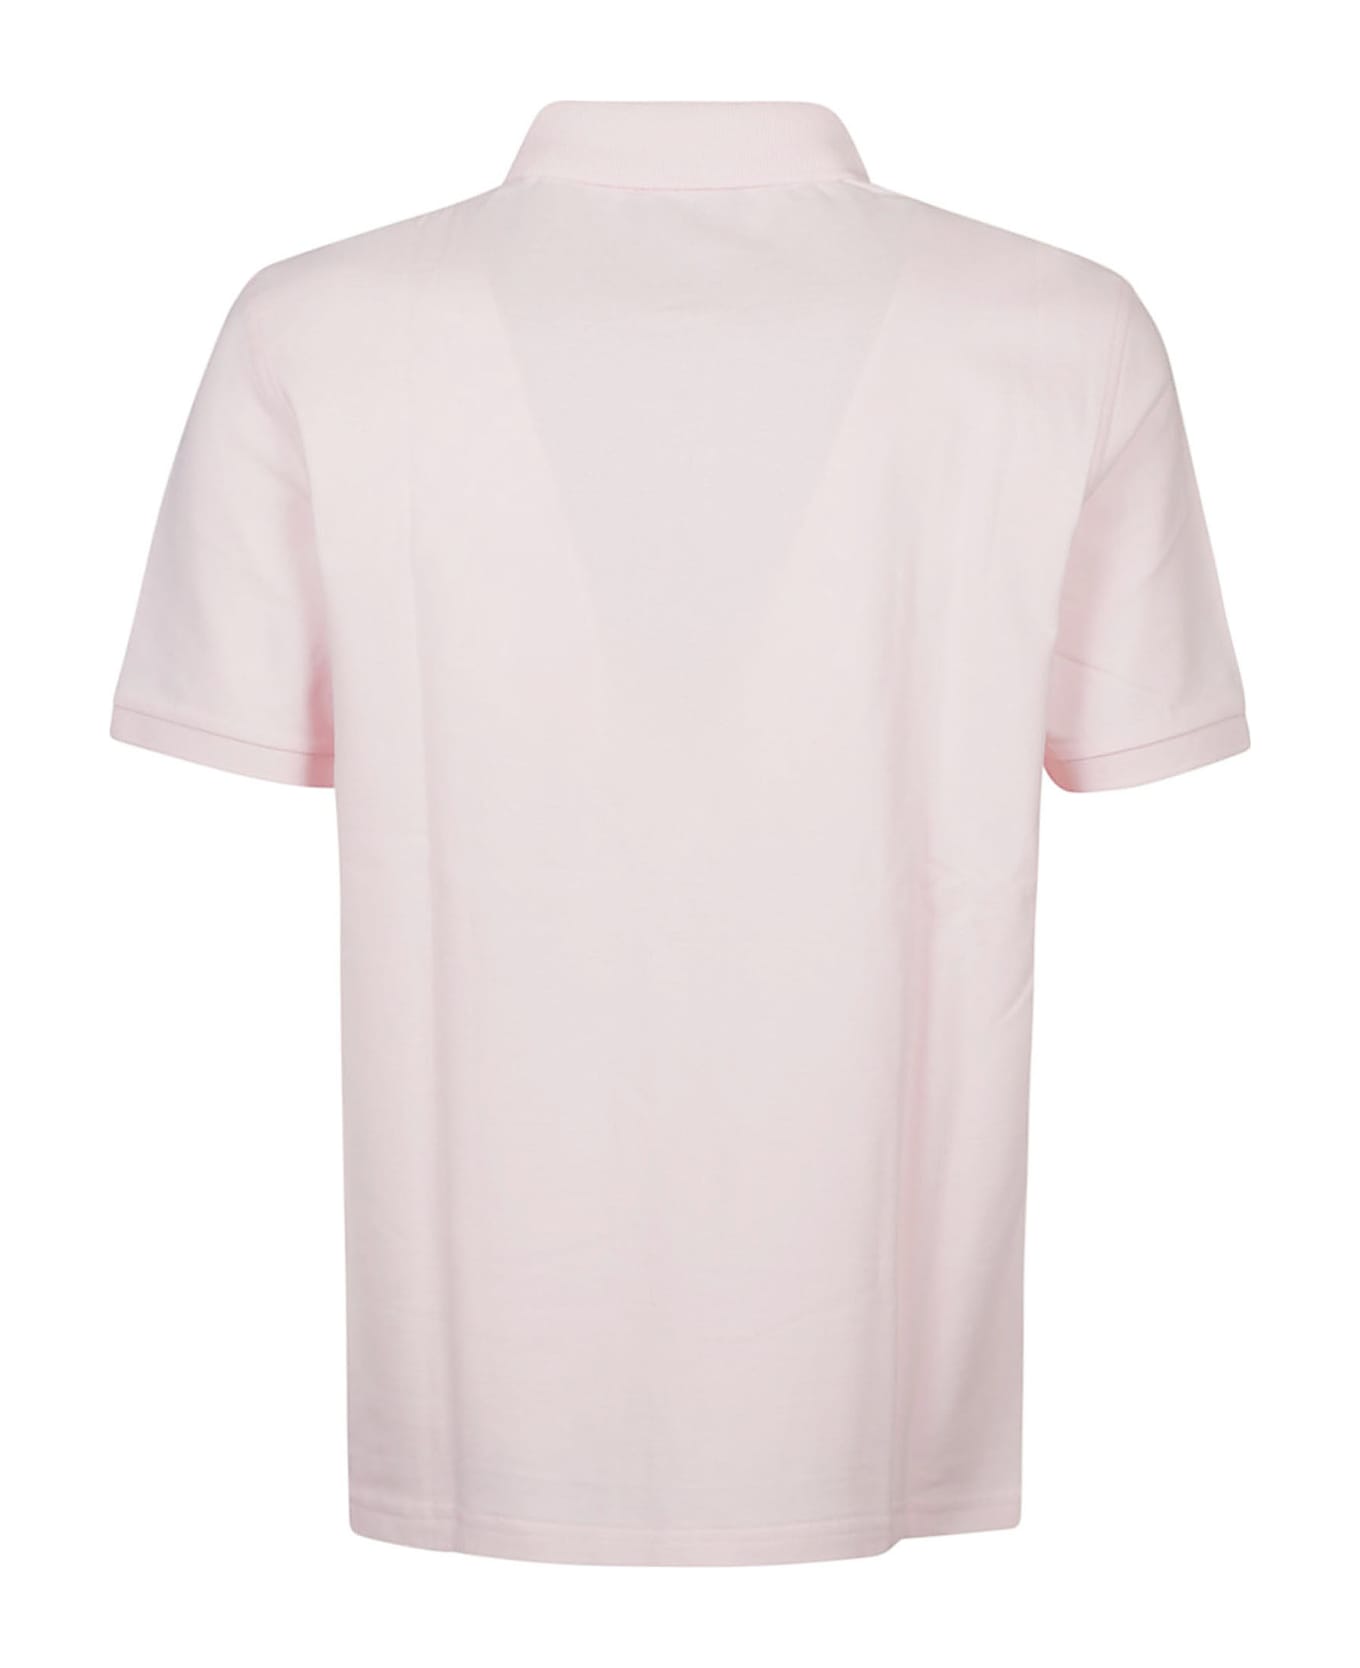 Vilebrequin Short Sleeve Washed Polo Shirt - Rosa Blushing Bride